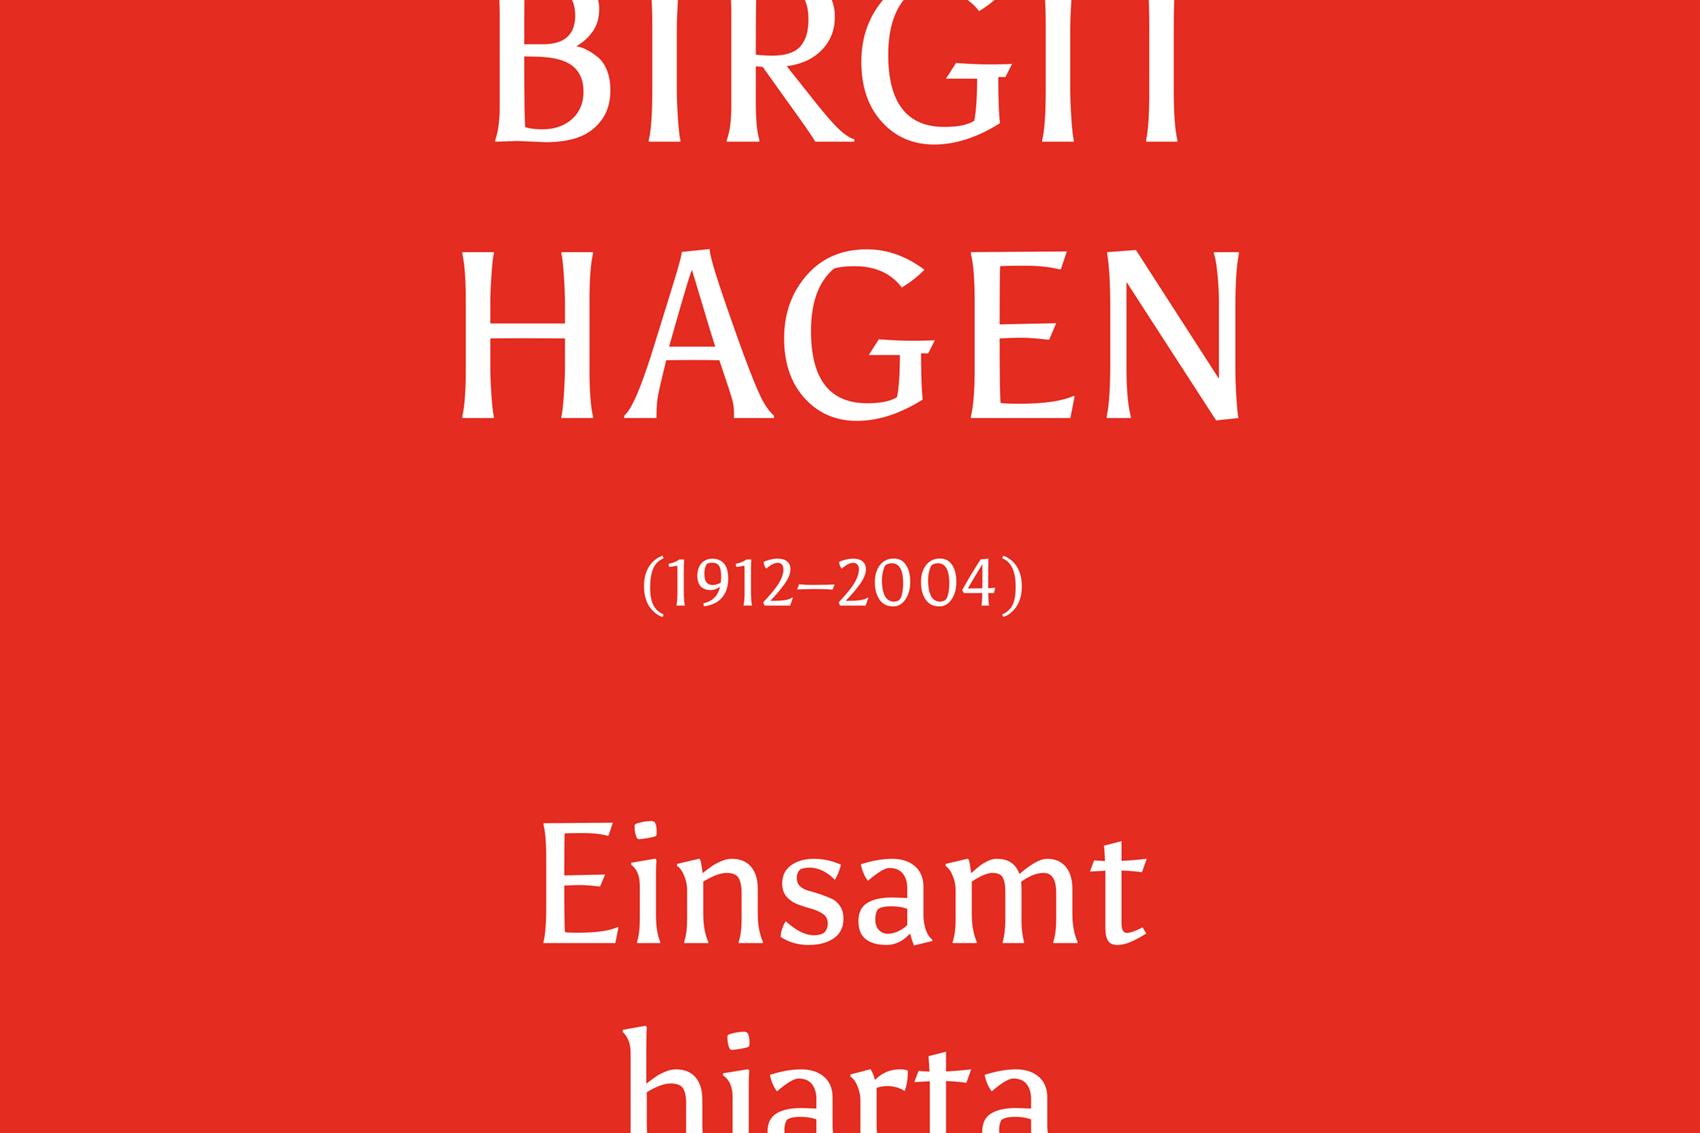 Visual identity for Birgit Hagen's exhibition - title